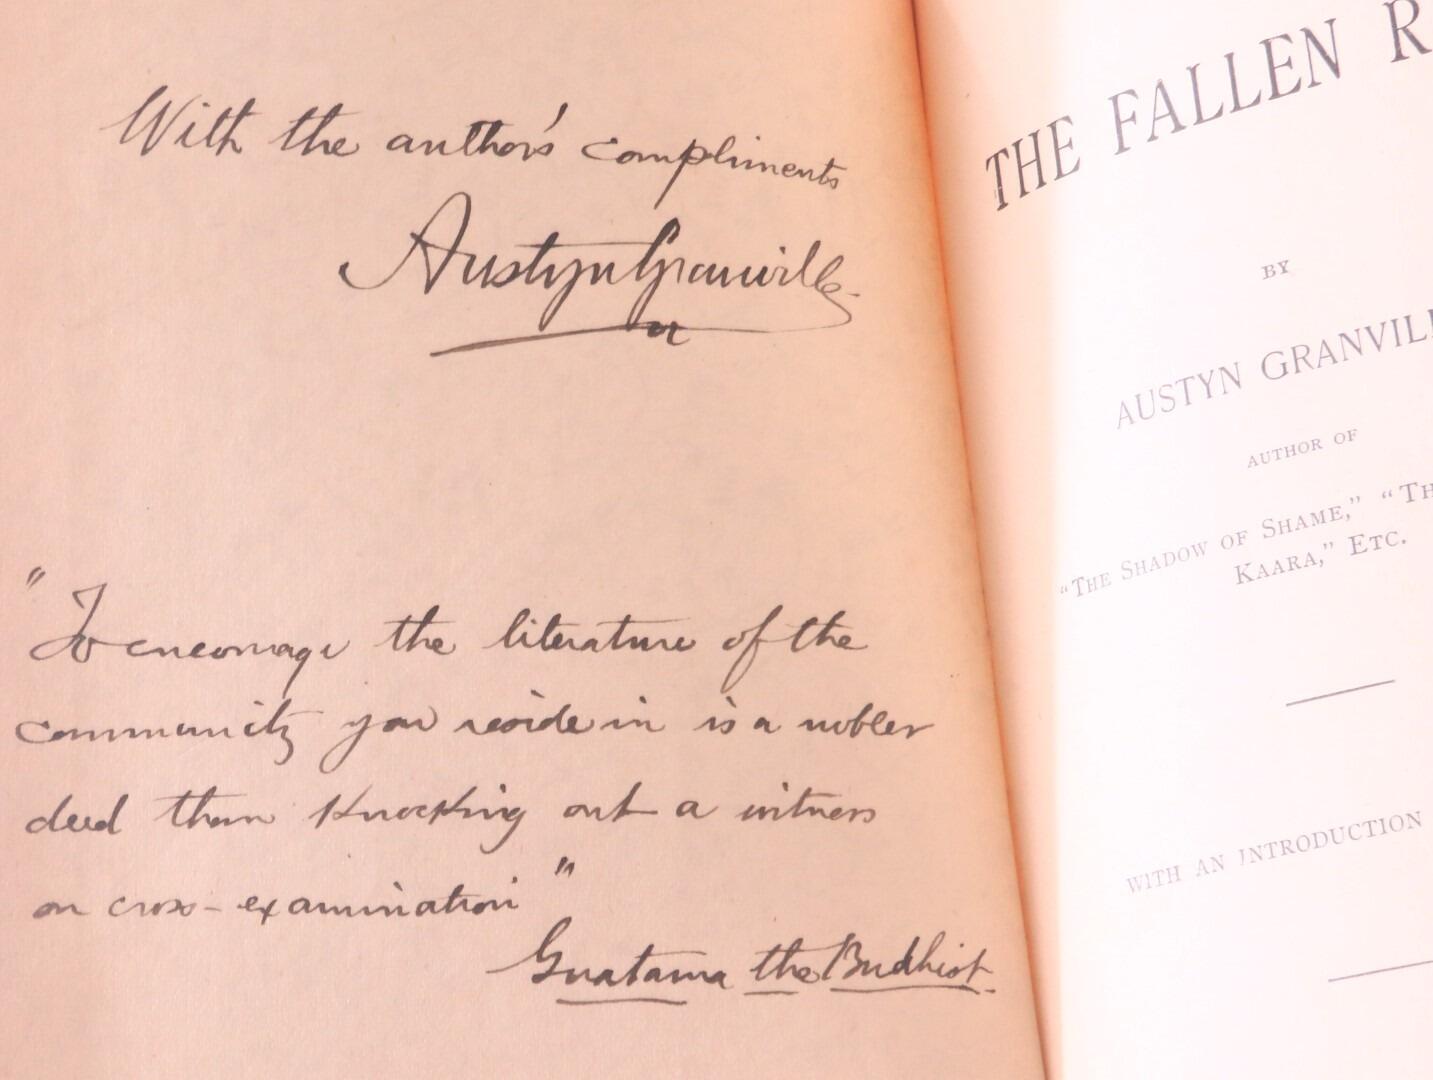 Austyn Granville - The Fallen Race - F.T. Neely, 1892, Signed First Edition.